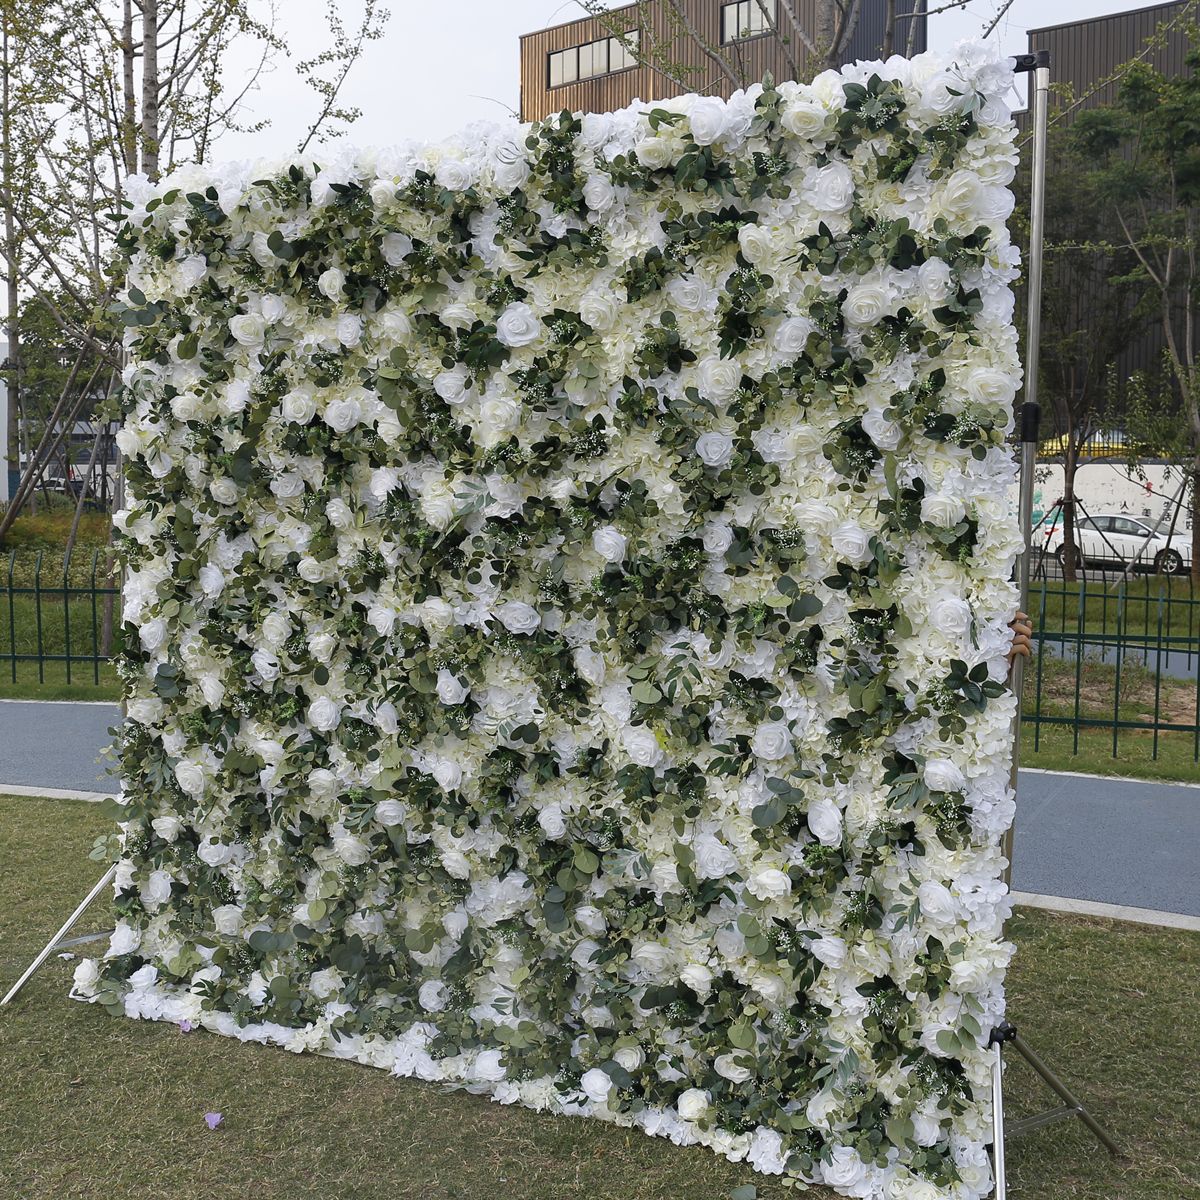 Simulation flower wall background plant wall Wedding decoration